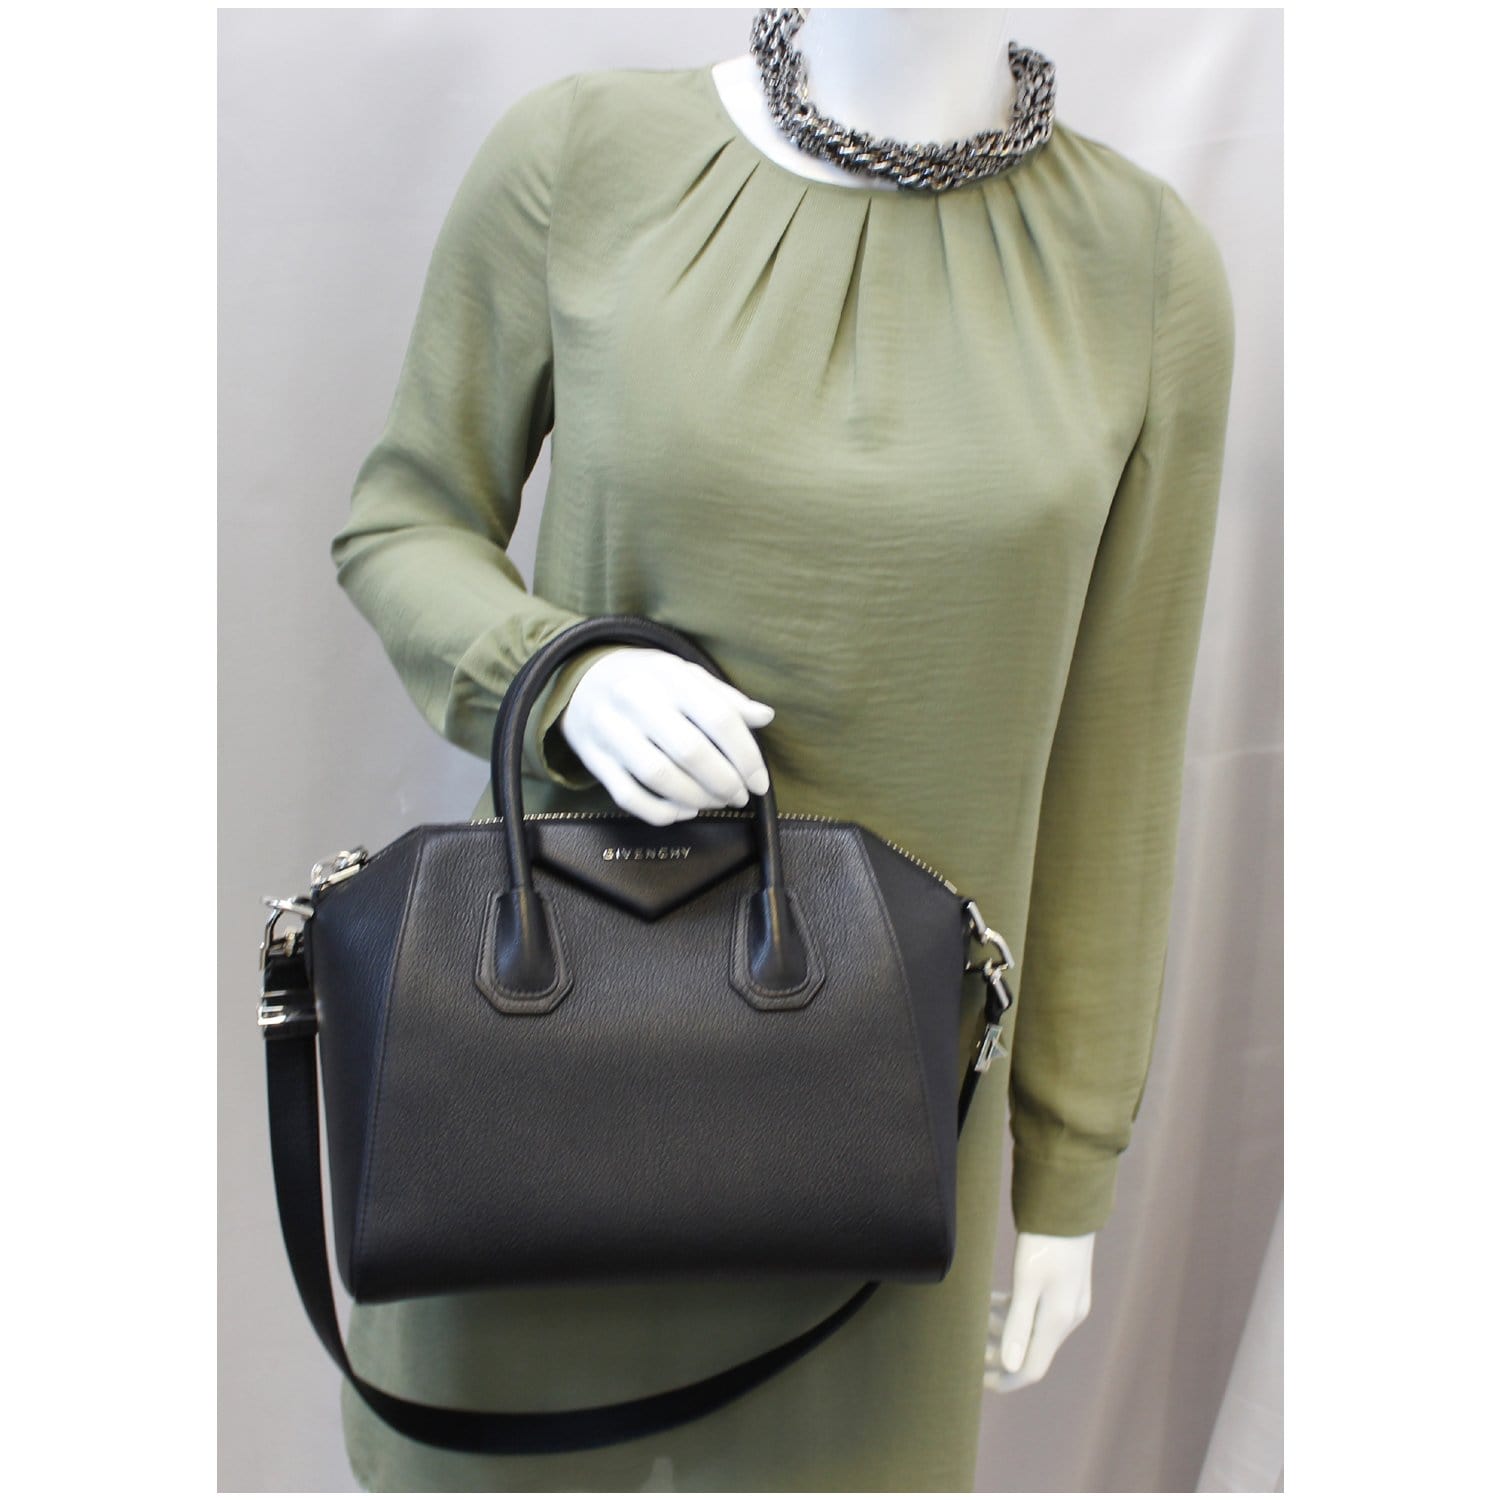 Givenchy Antigona Small Bag